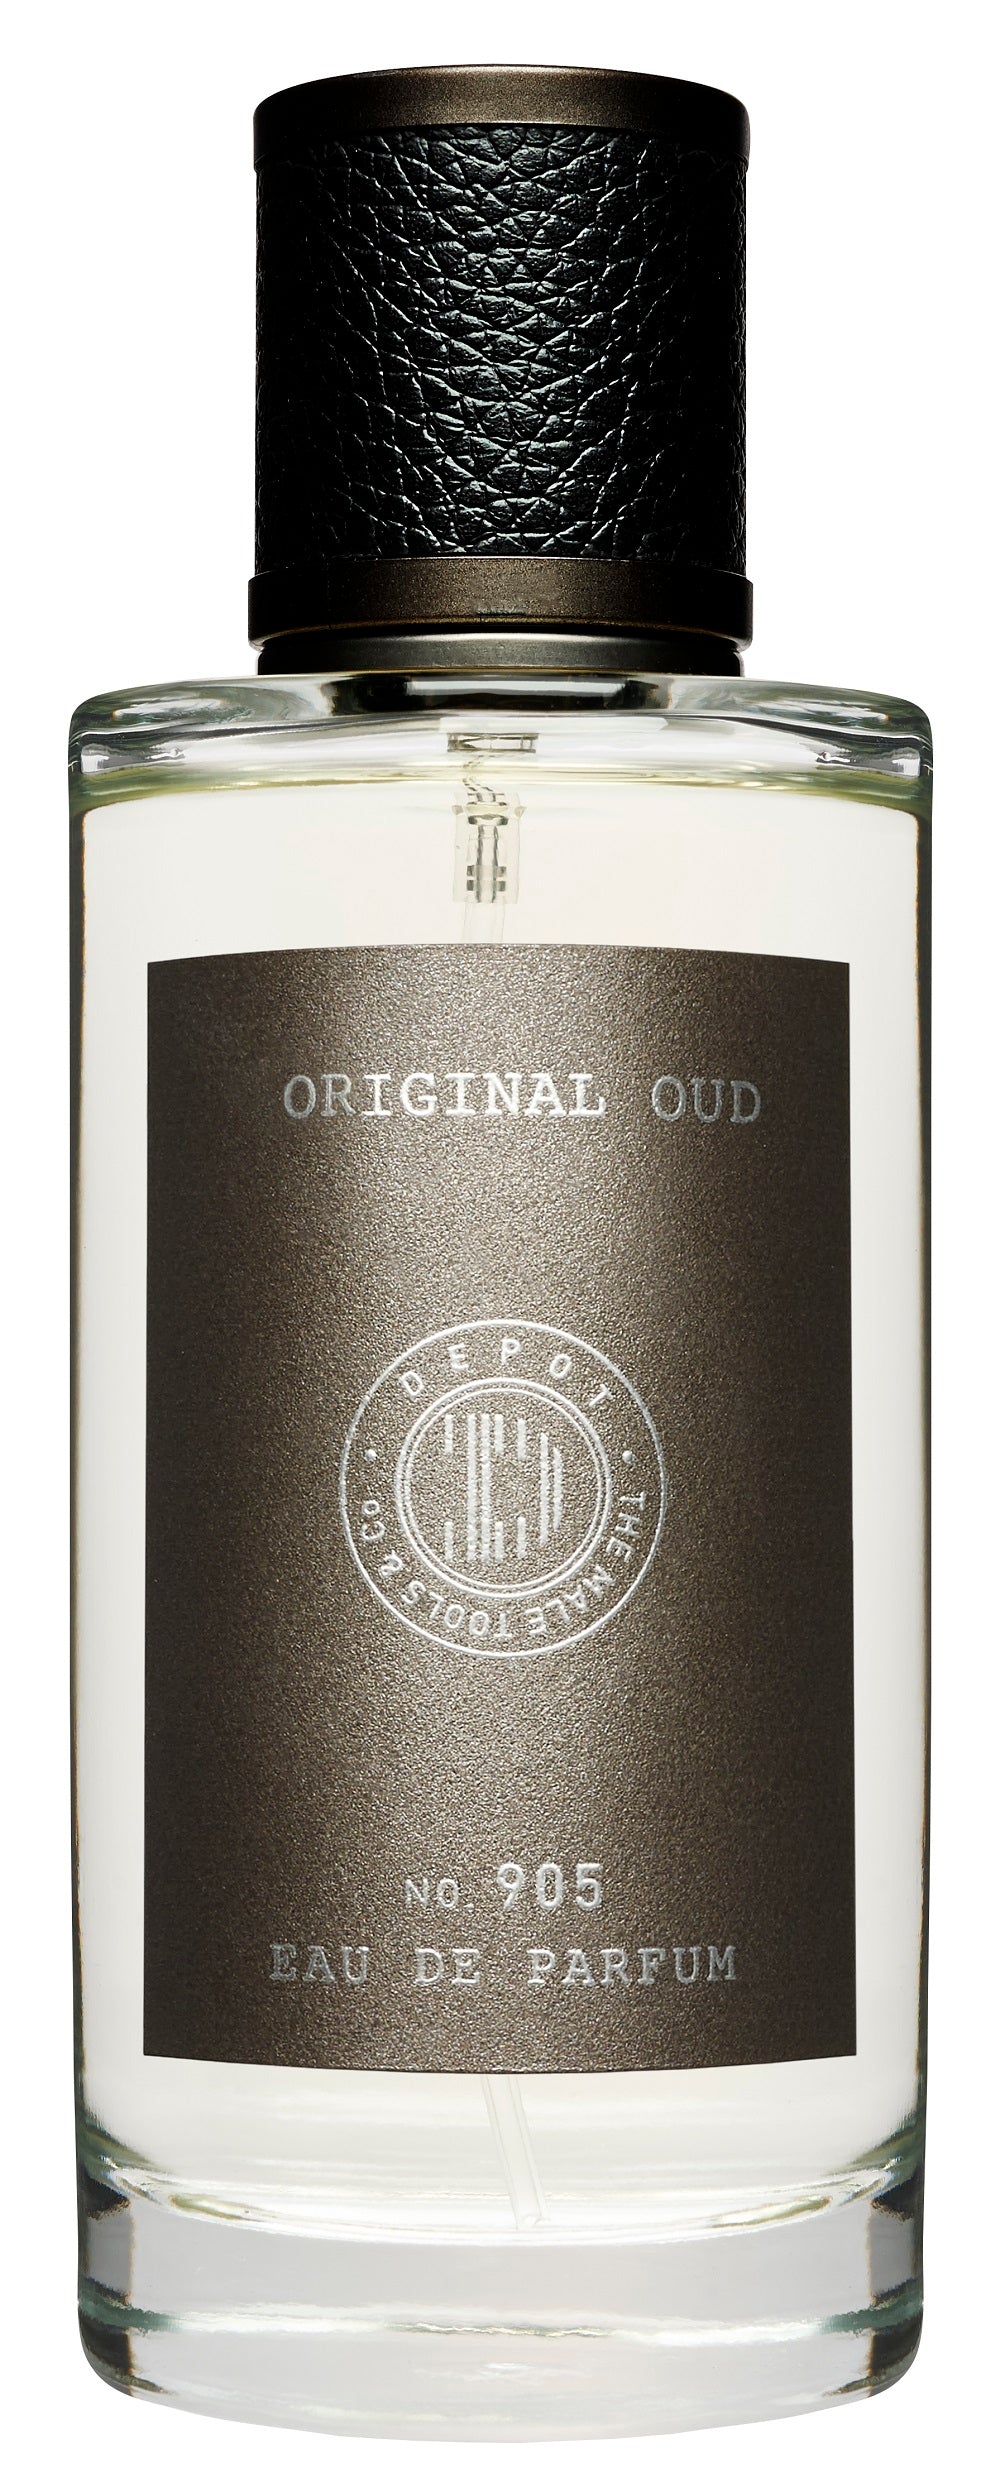 Depot No. 905 Original Oud Eau de Parfum 100 ml